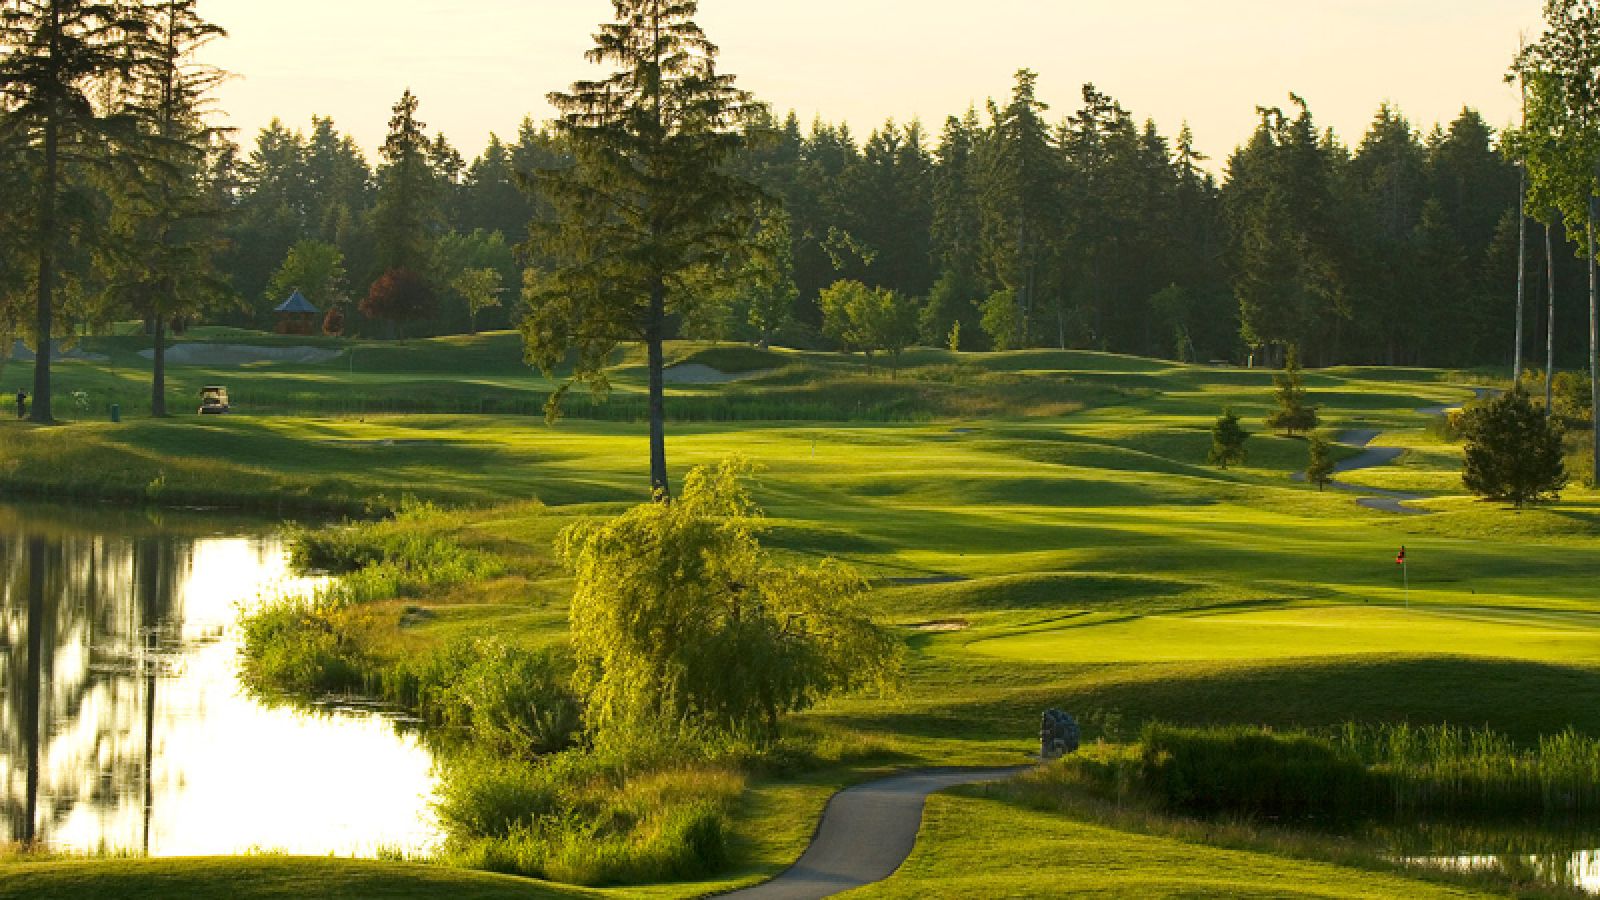 Crown Isle Resort - Vancouver Island golf packages